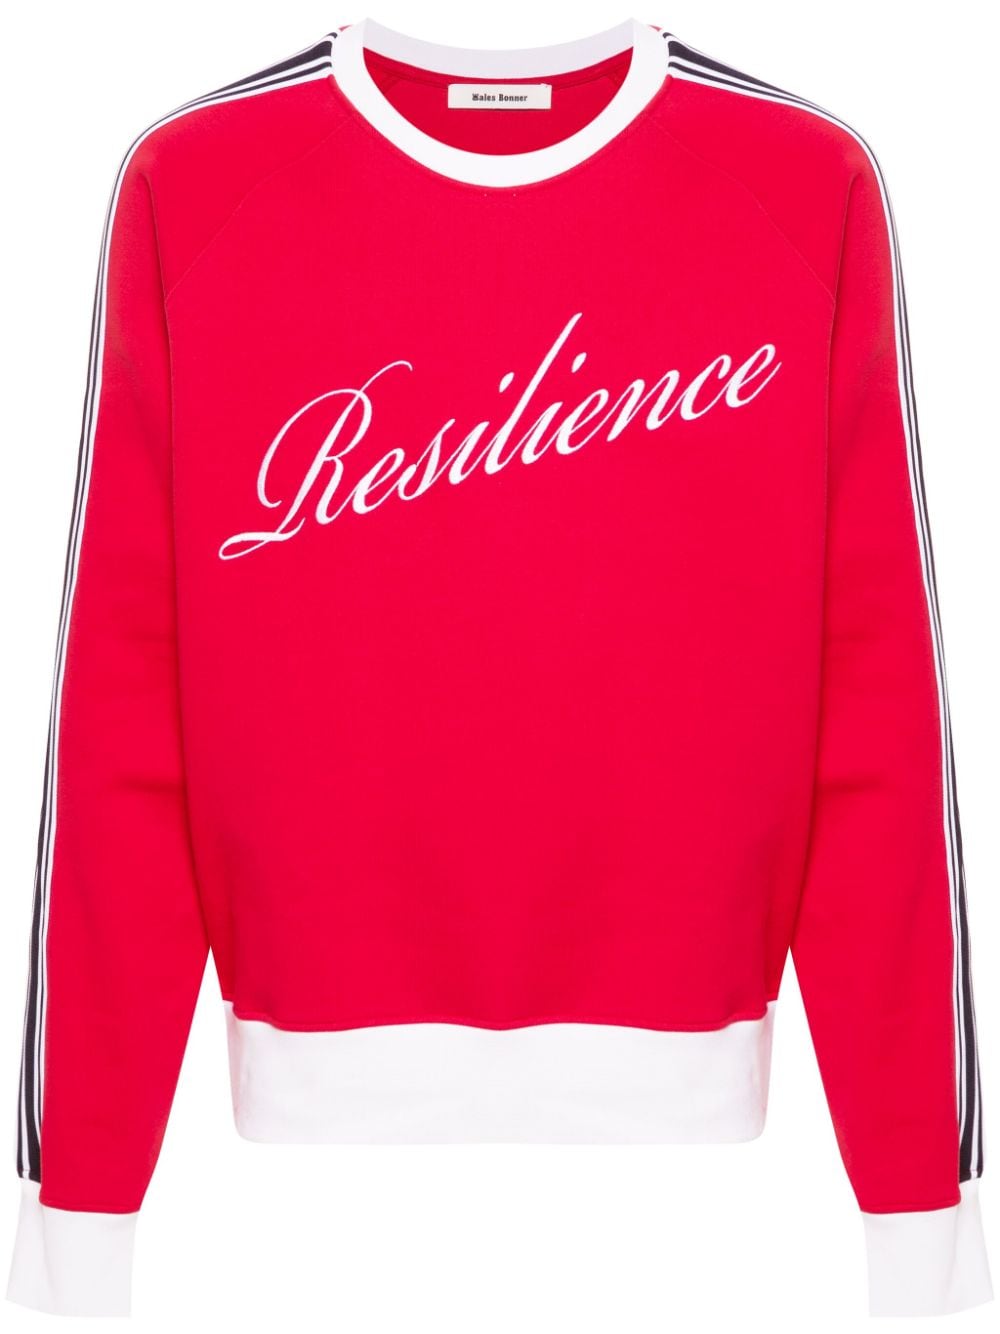 Wales Bonner Resilience organic cotton sweatshirt - Red von Wales Bonner